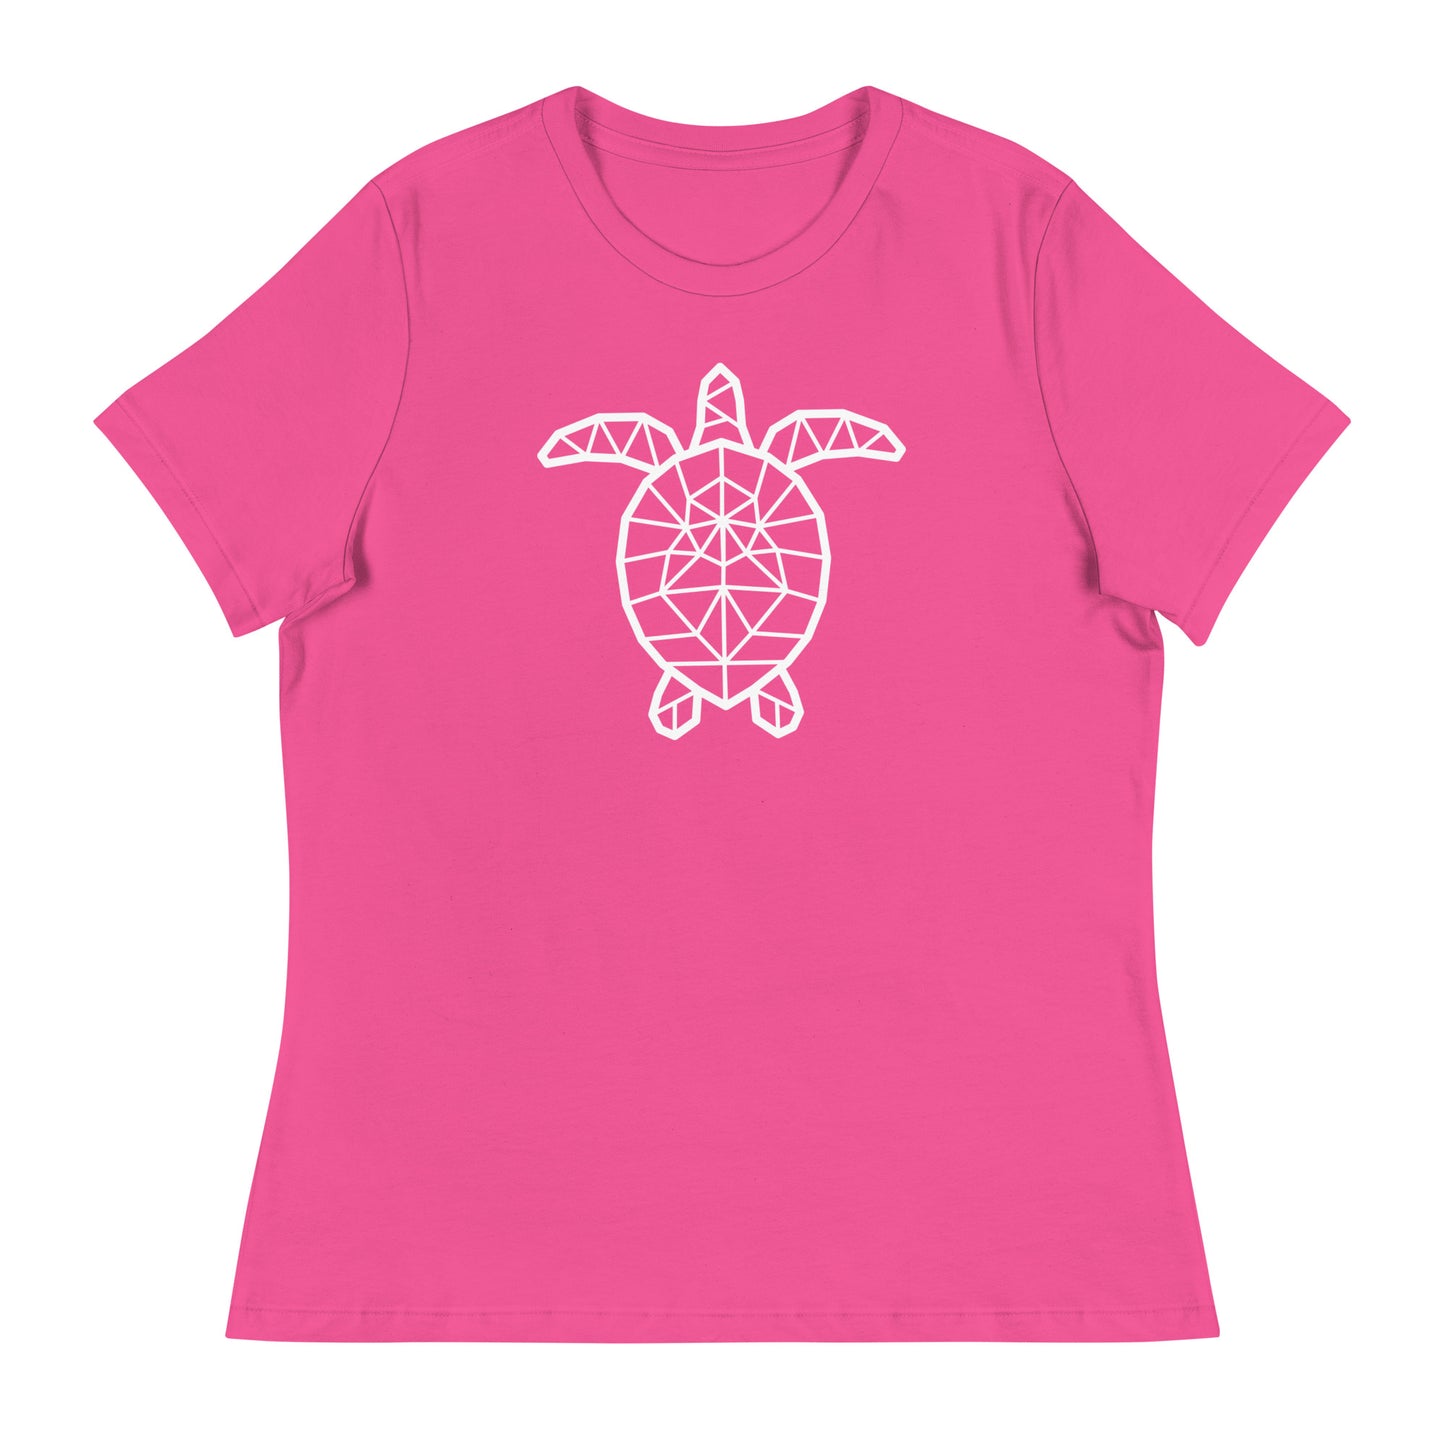 Women's Relaxed Soft & Smooth Premium Quality T-Shirt Mosaic Turtle Design by IOBI Original Apparel